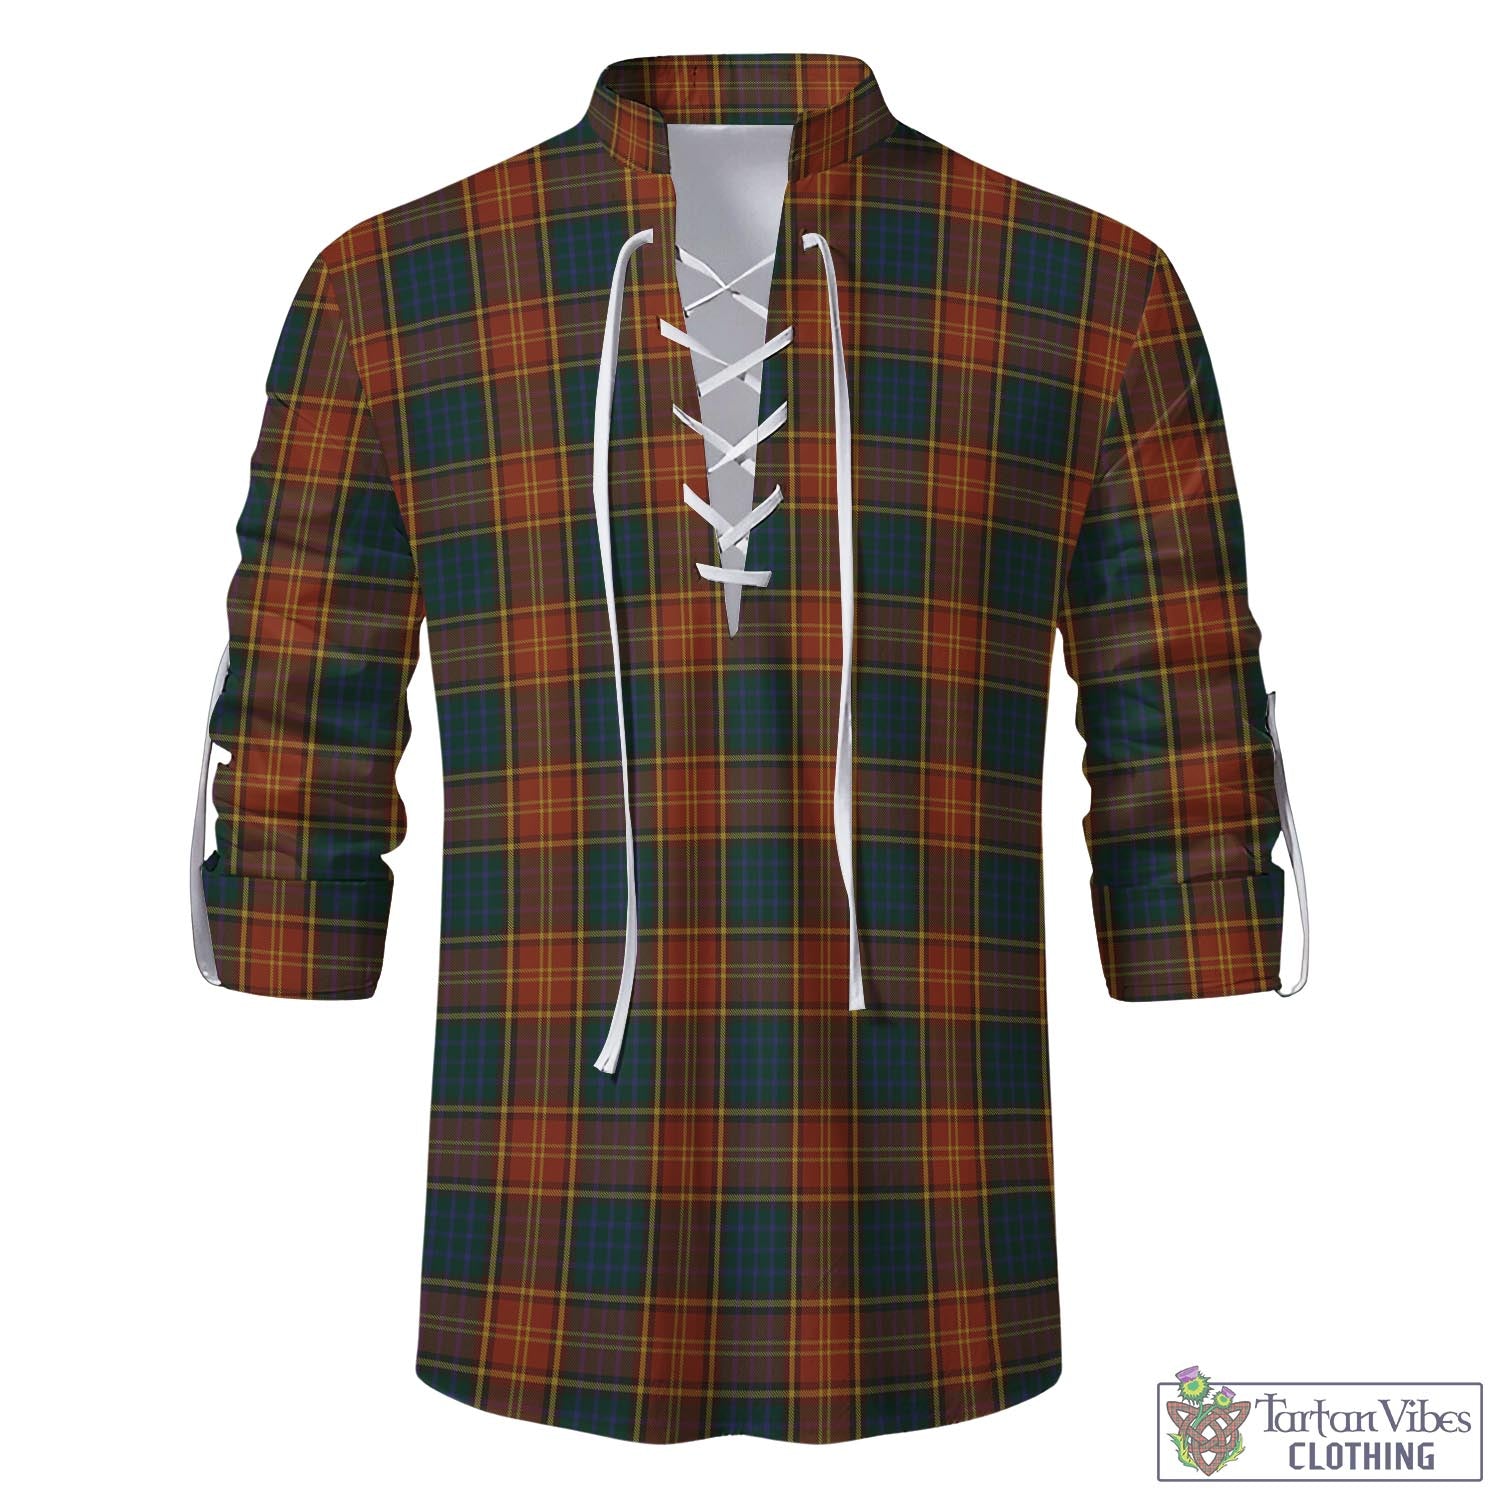 Tartan Vibes Clothing Roscommon County Ireland Tartan Men's Scottish Traditional Jacobite Ghillie Kilt Shirt